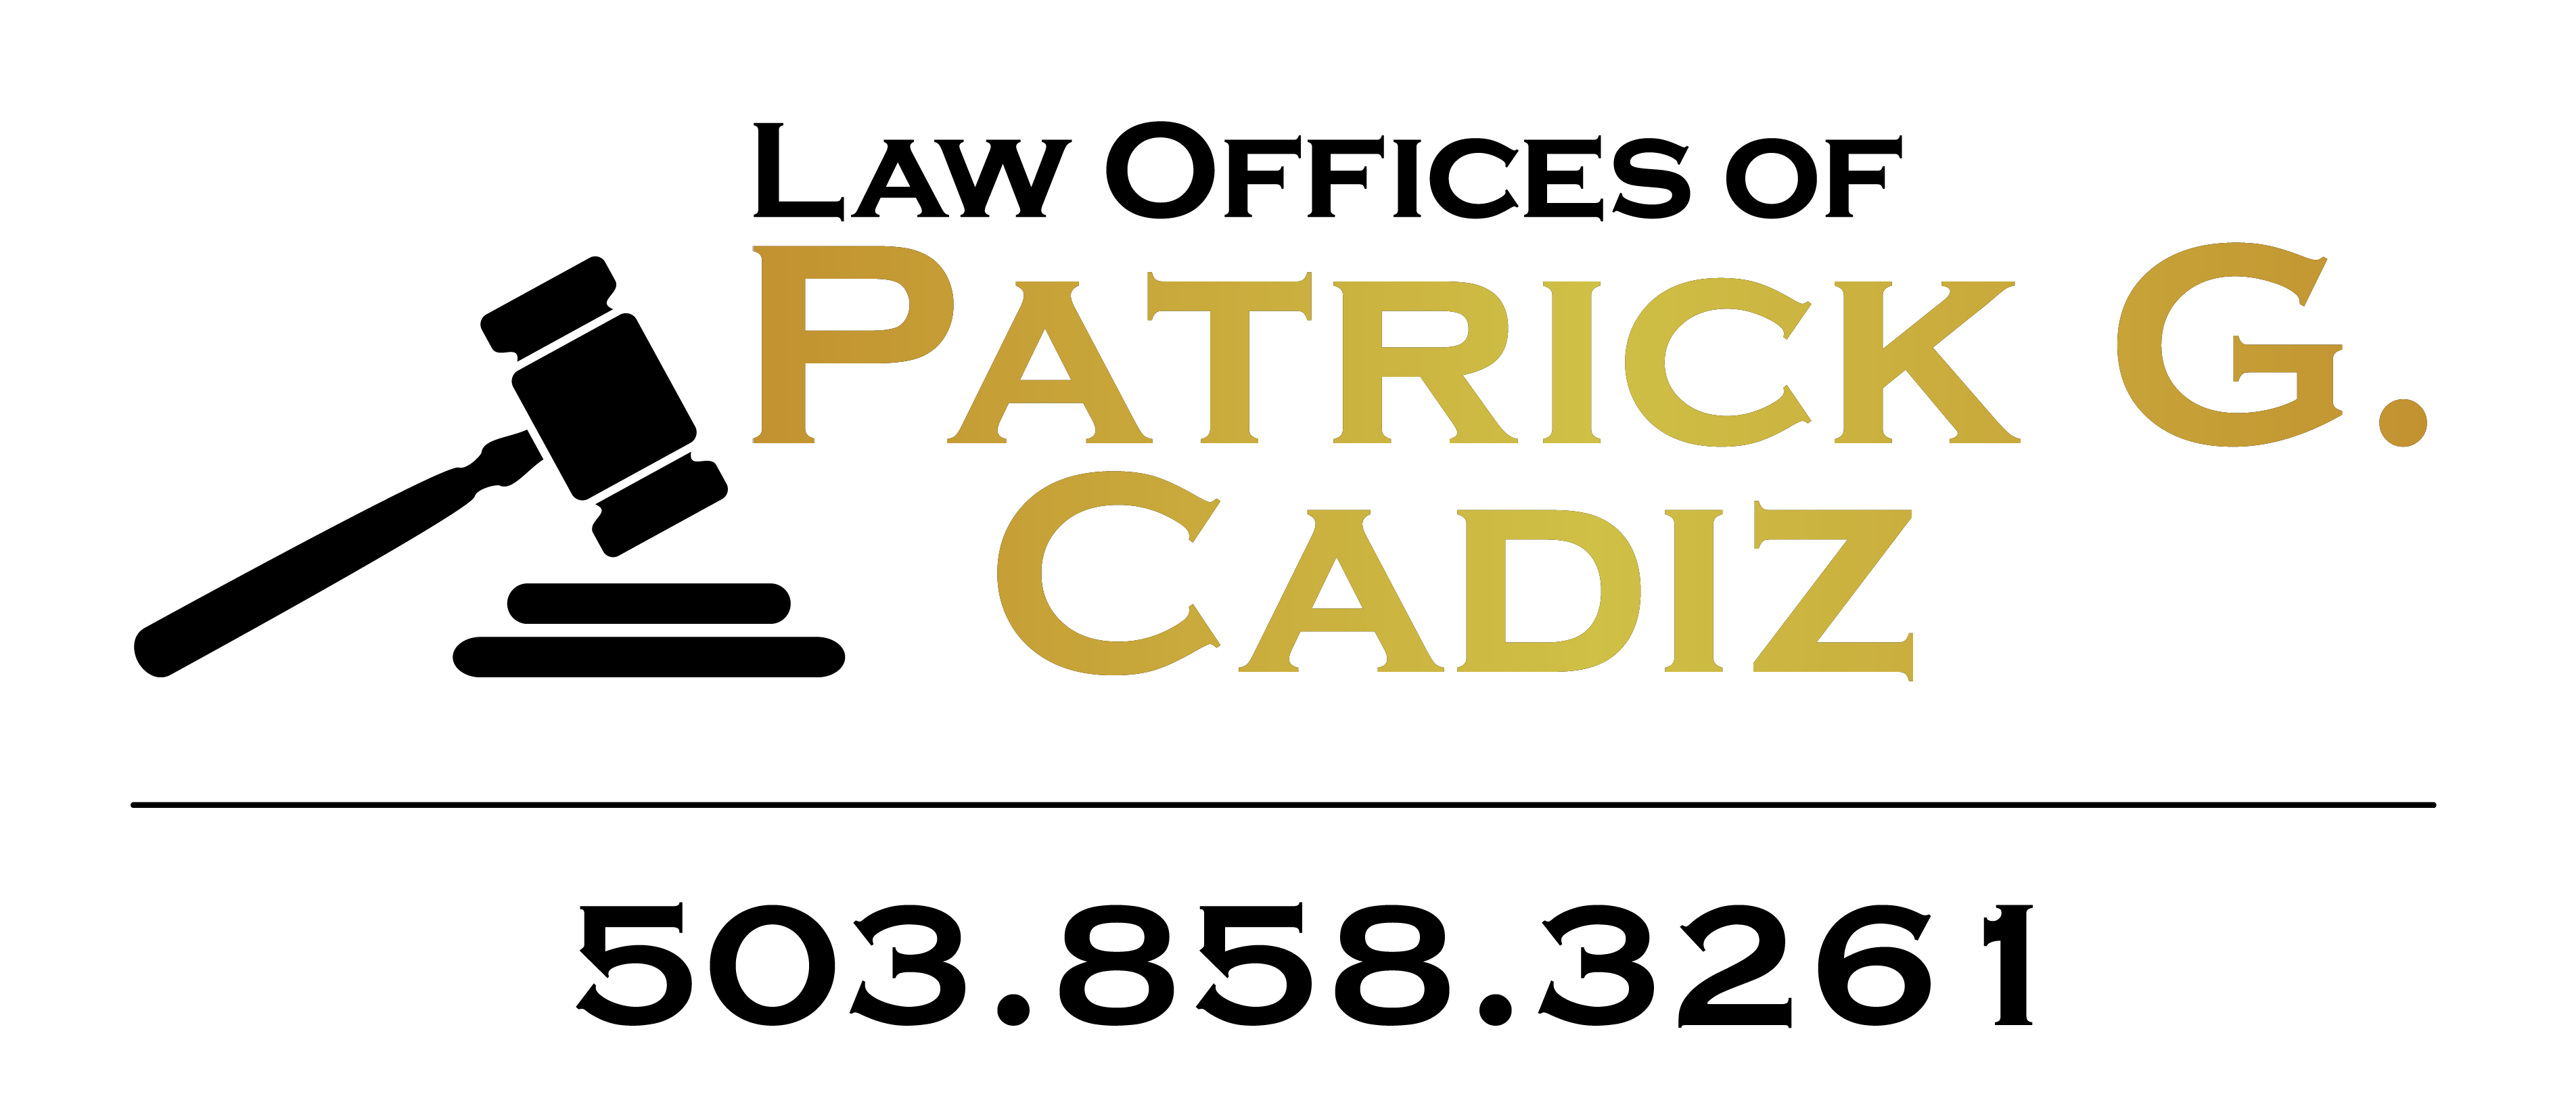 Law Office of Patrick Cadiz